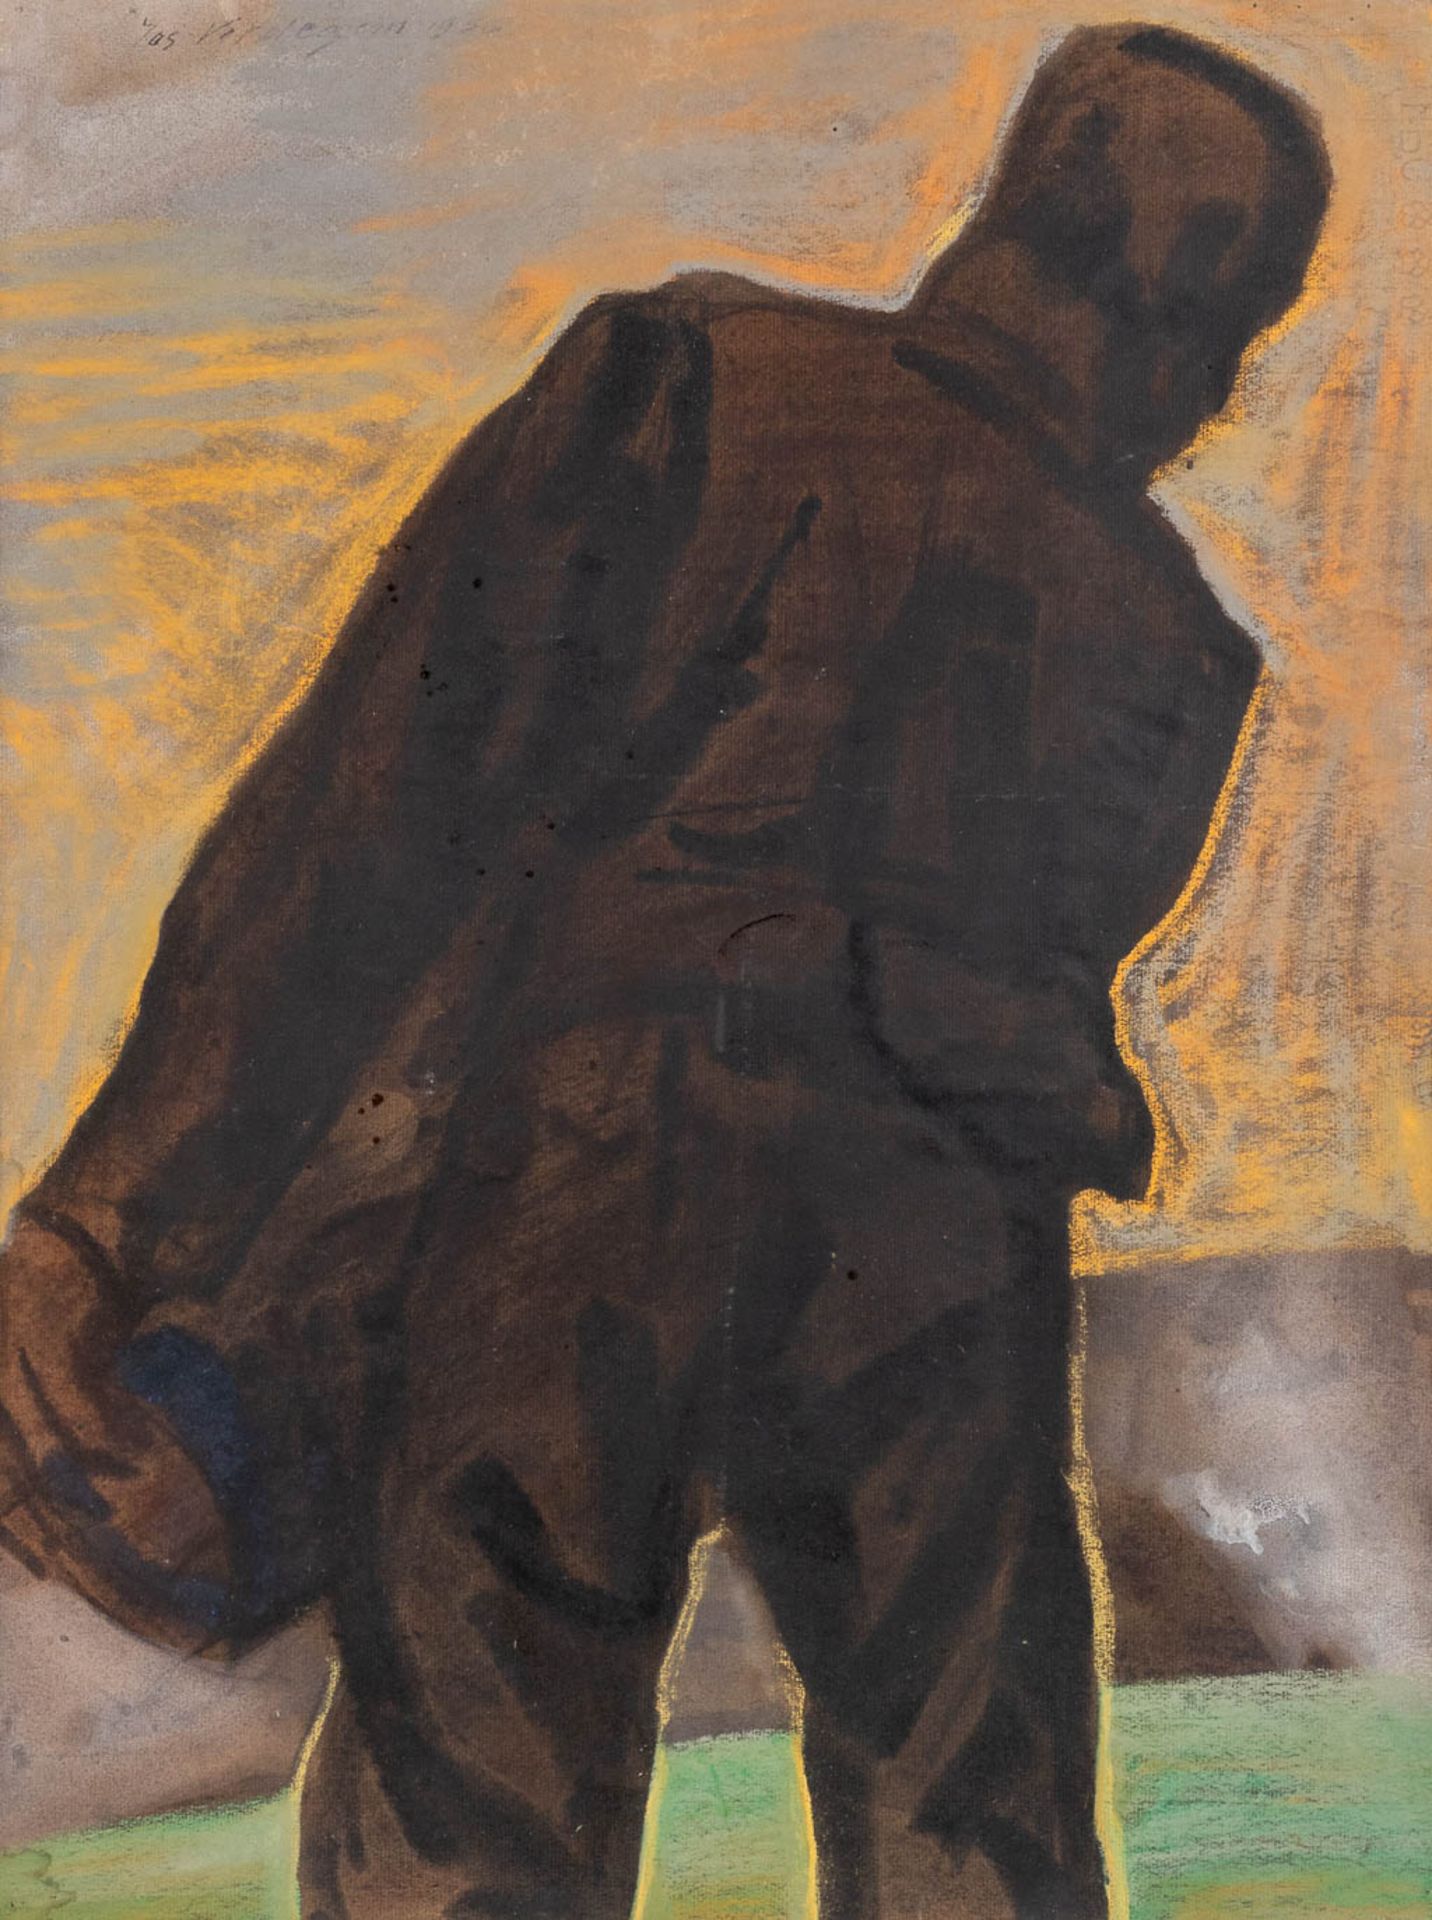 Joseph VERDEGEM (1897-1957) 'Farmer on the field' a drawing, gouache on paper. 1956. (W:46 x H:62 c